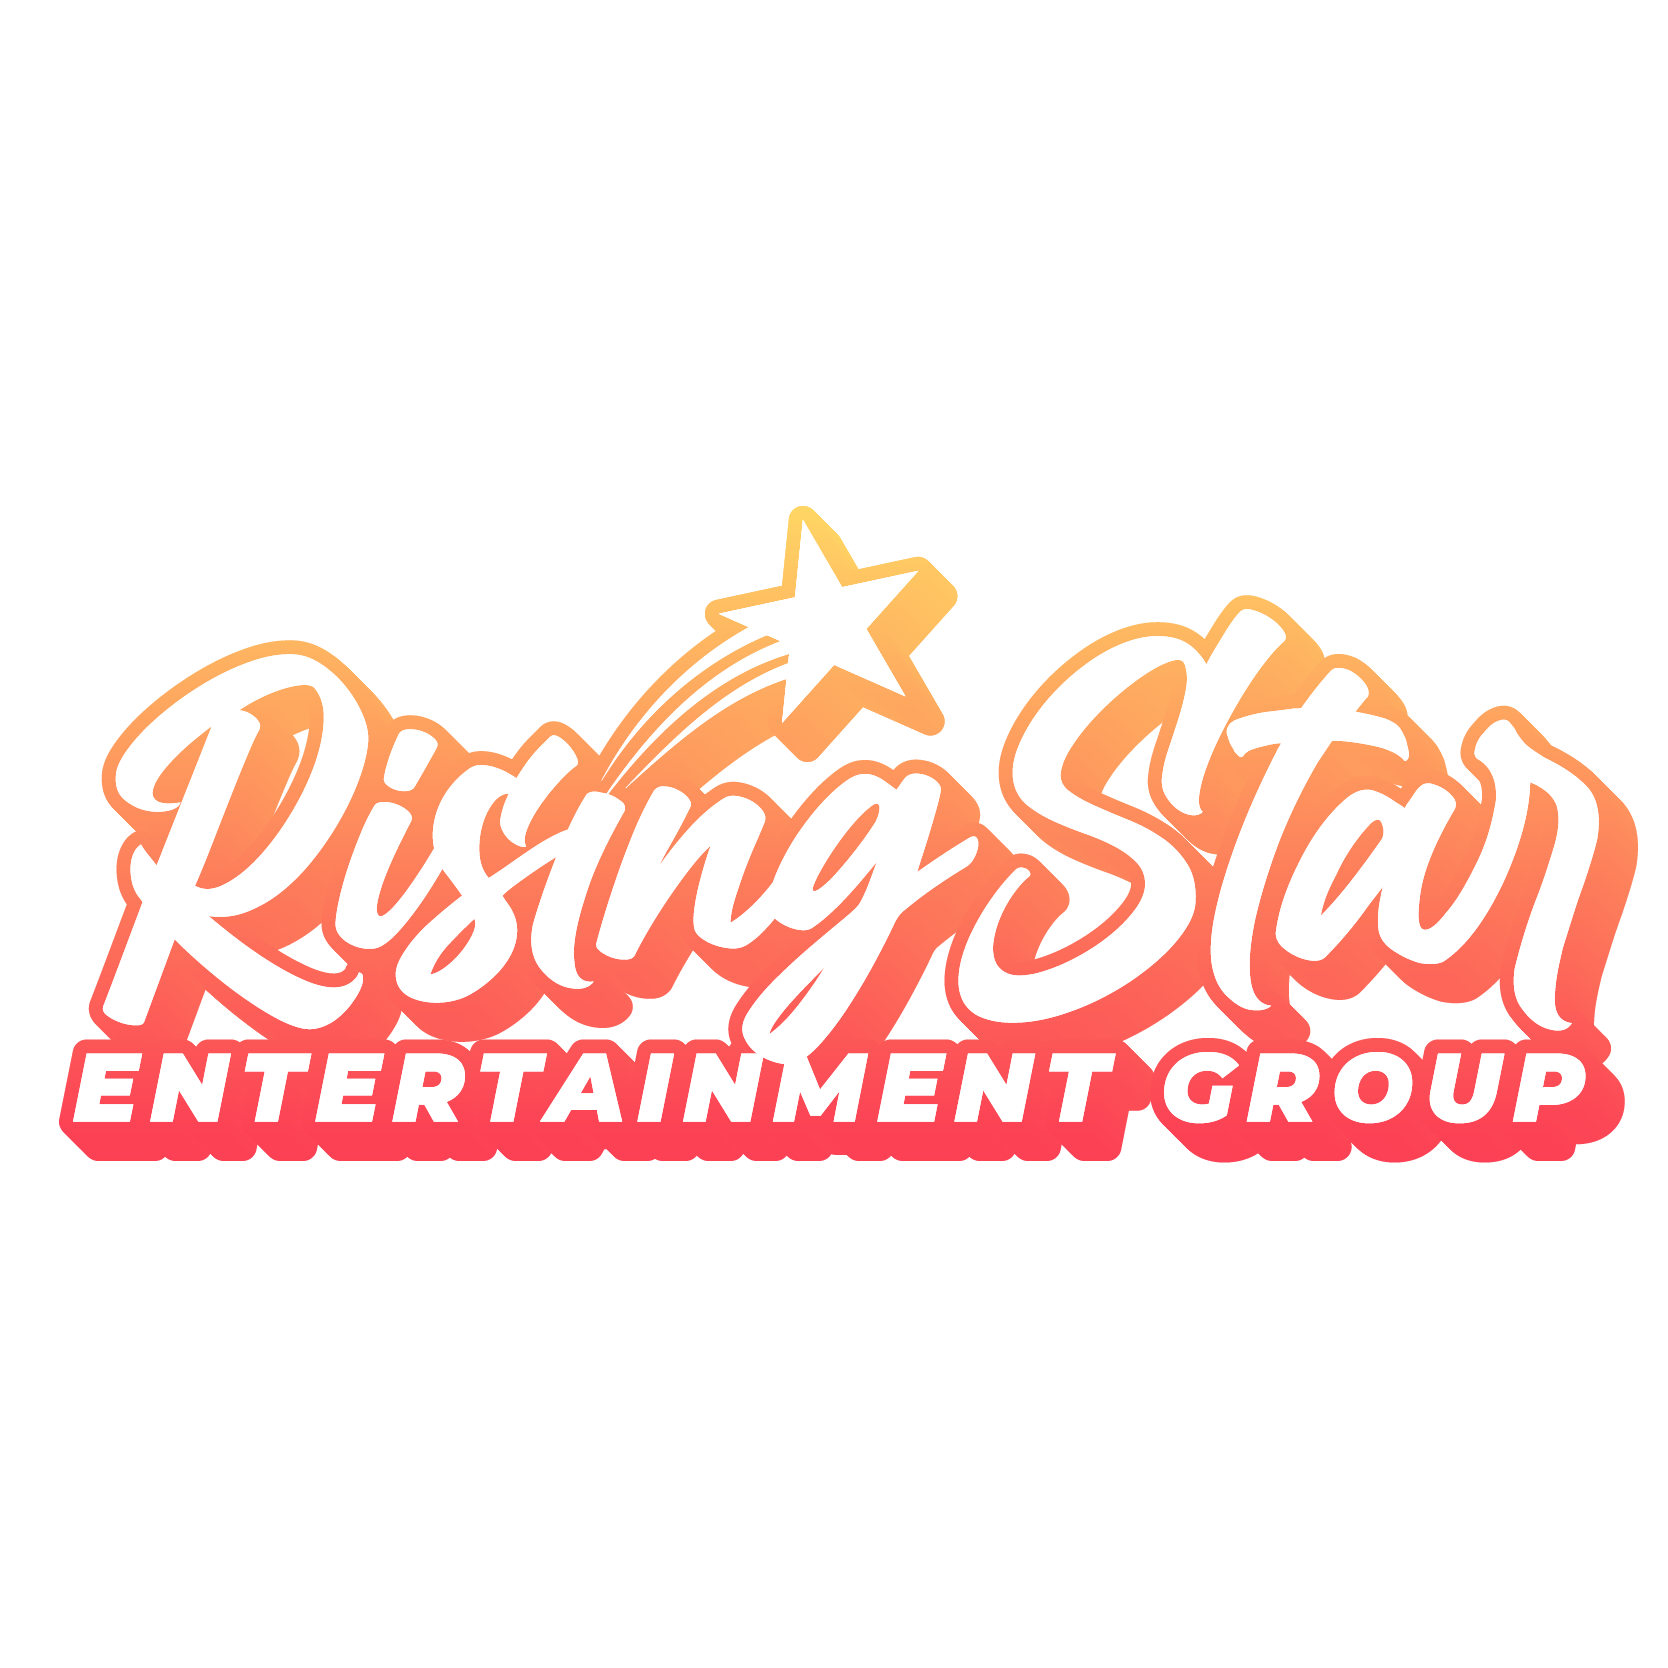 Rising Star Entertainment Group